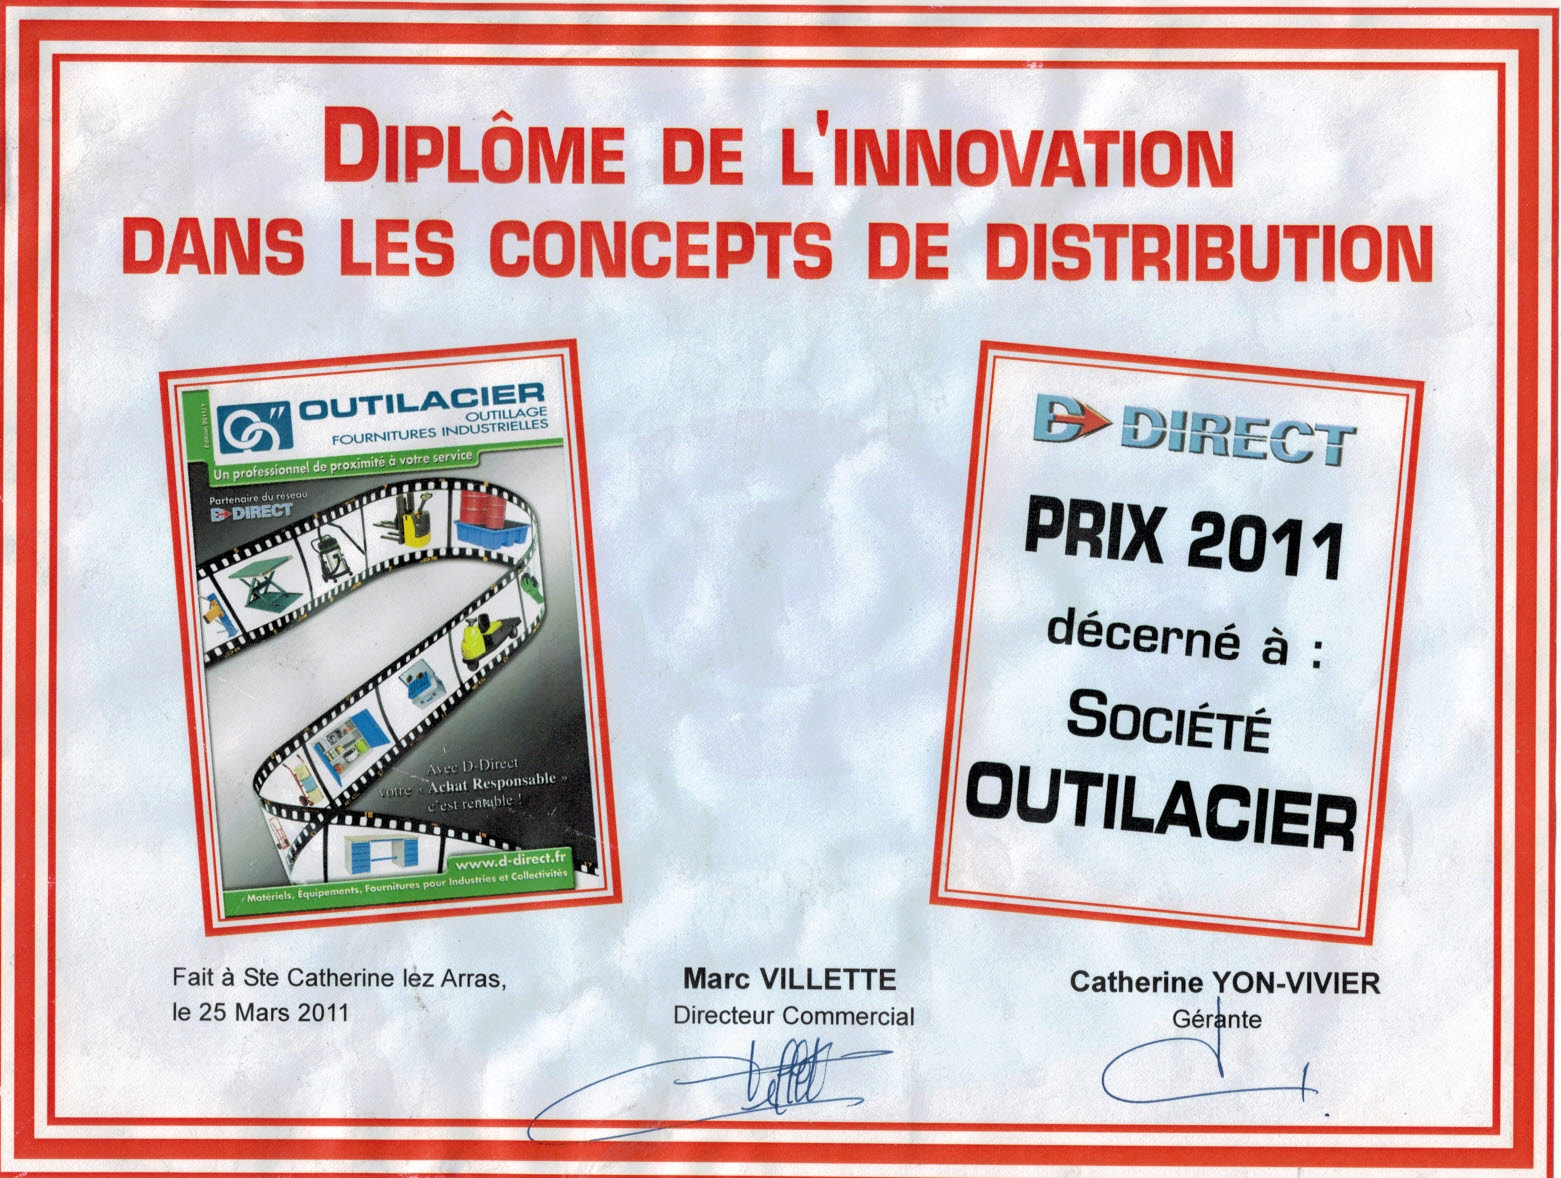 Prix D Direct 2011 innovation distribution Outilacier